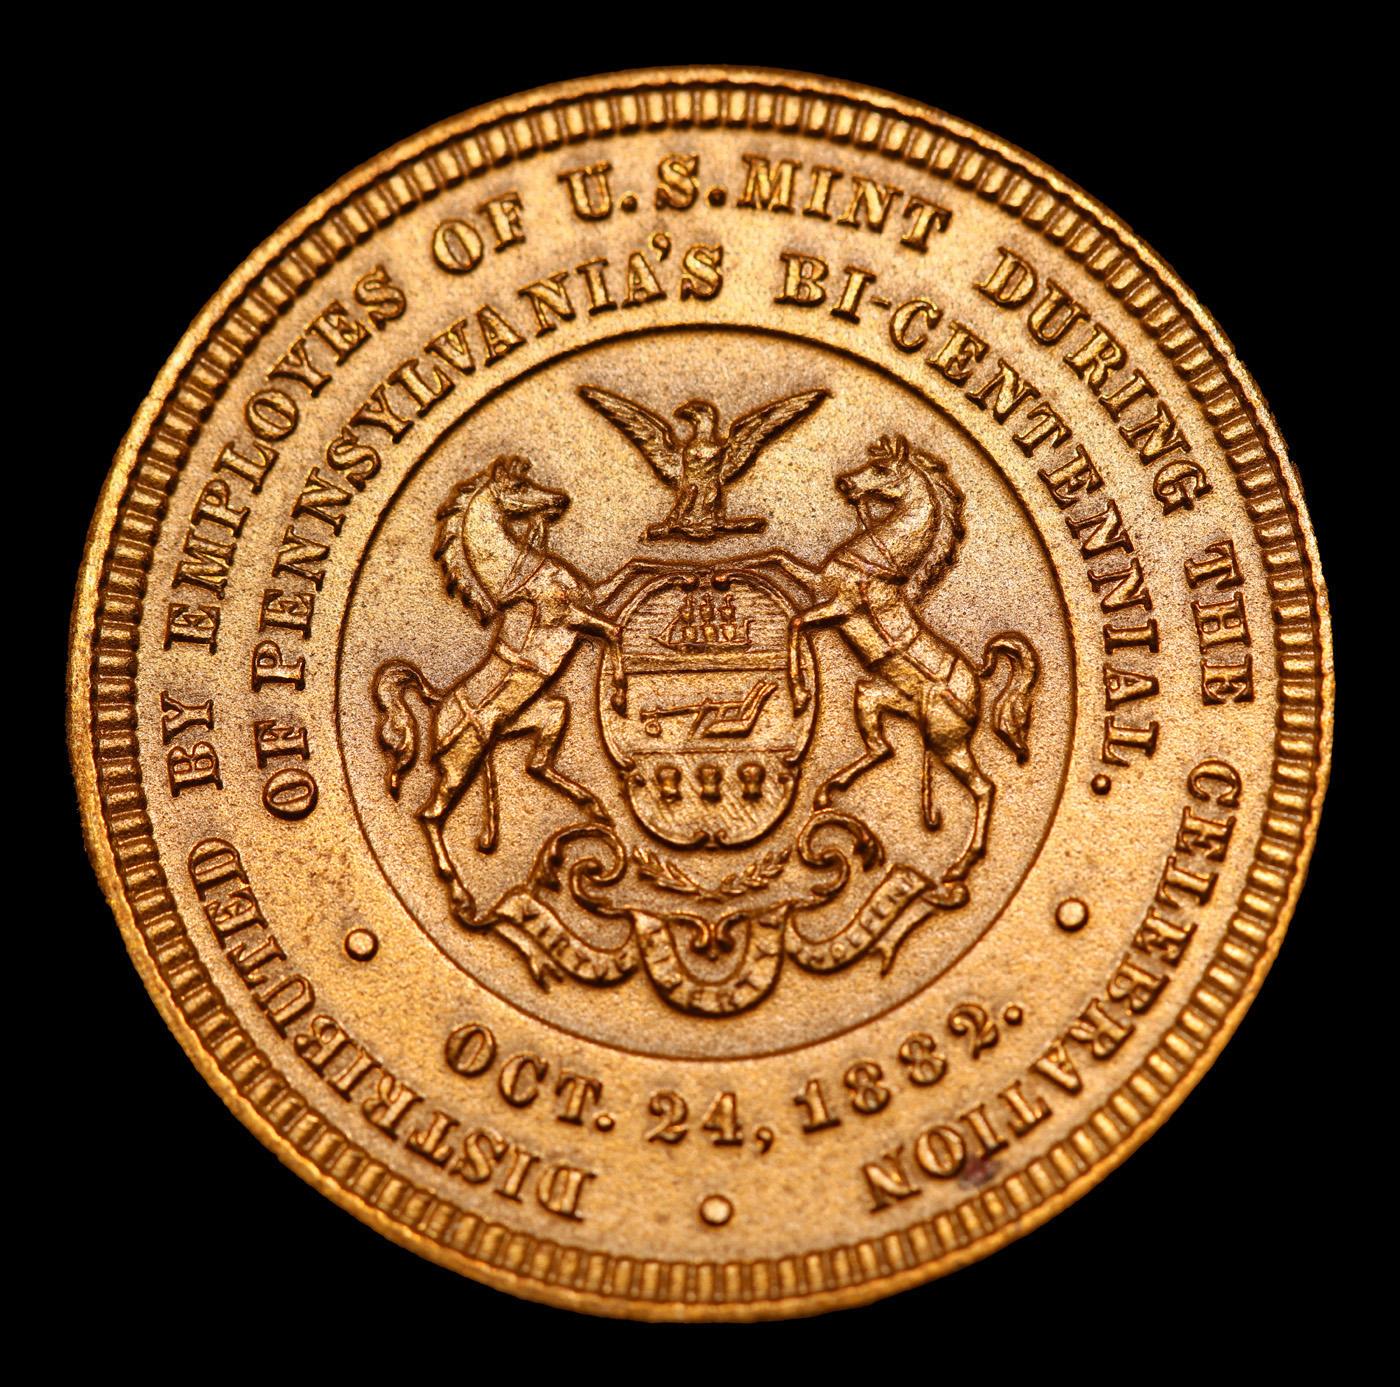 1882 William Penn Medal - US Mint Employees, Pennsylvania Bi-Centennial J-CM-42 Grades GEM Unc